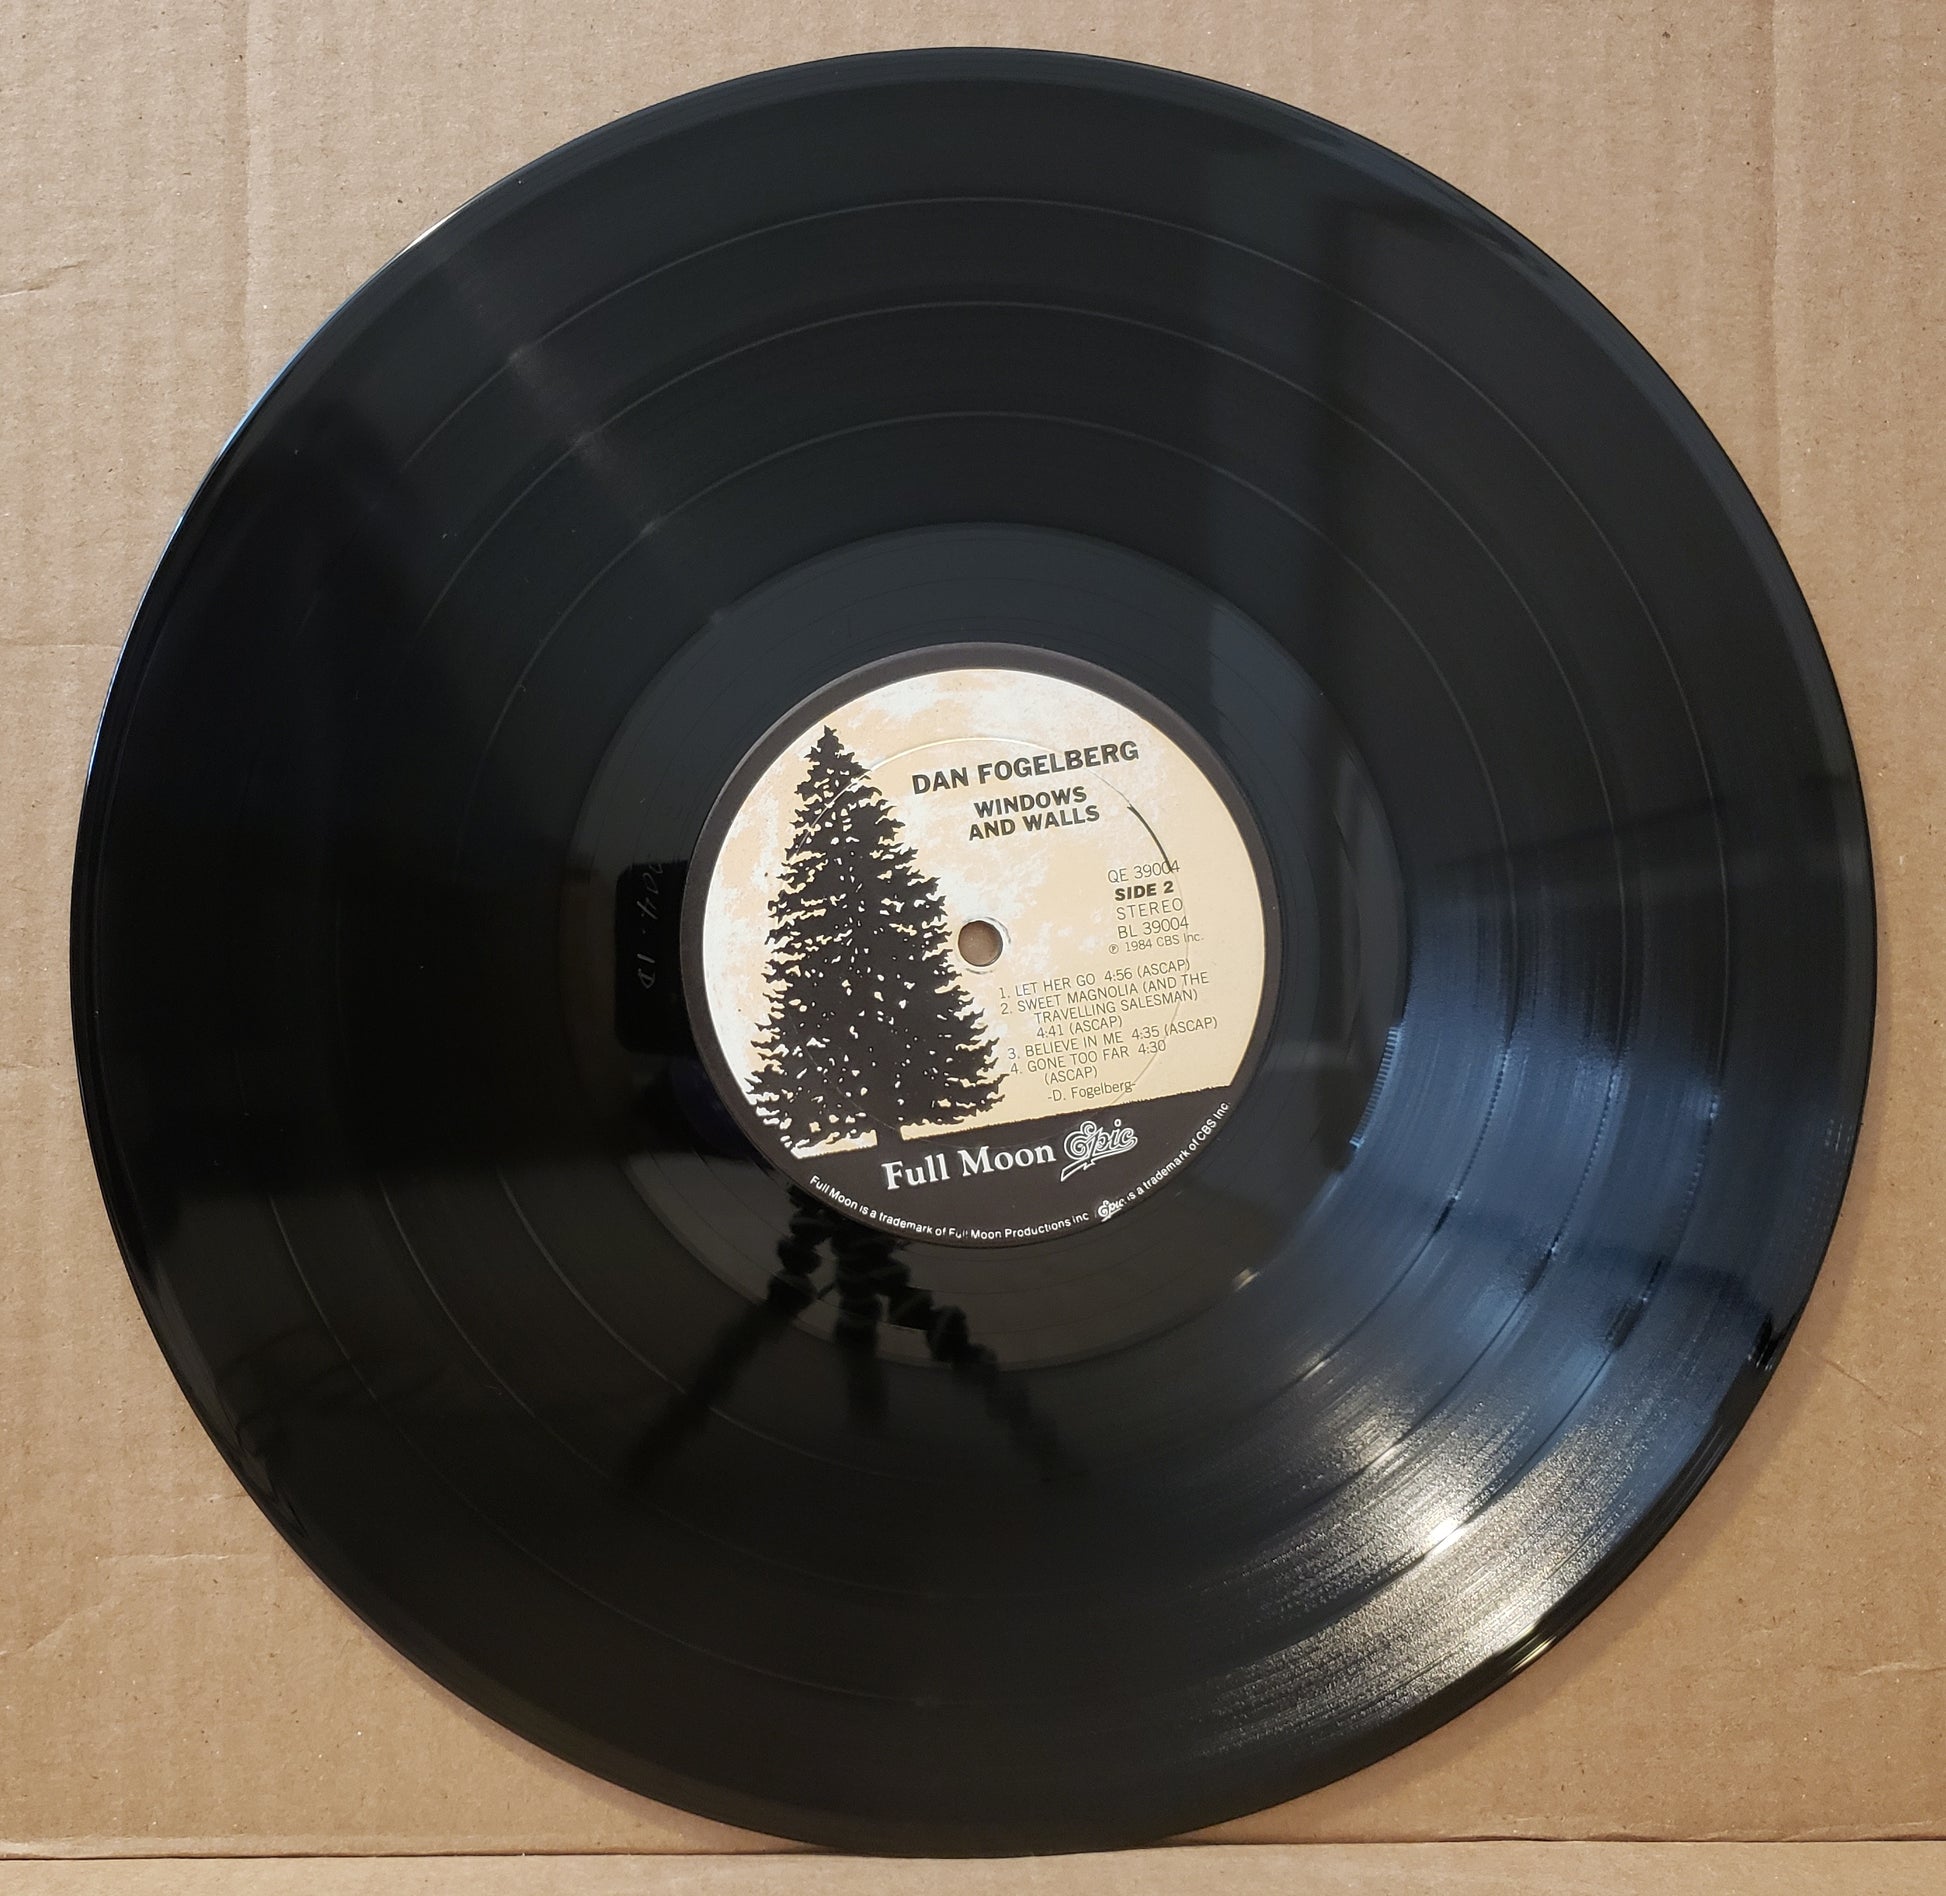 Dan Fogelberg - Windows and Walls [1984 Pitman] [Used Vinyl Record LP] [B]